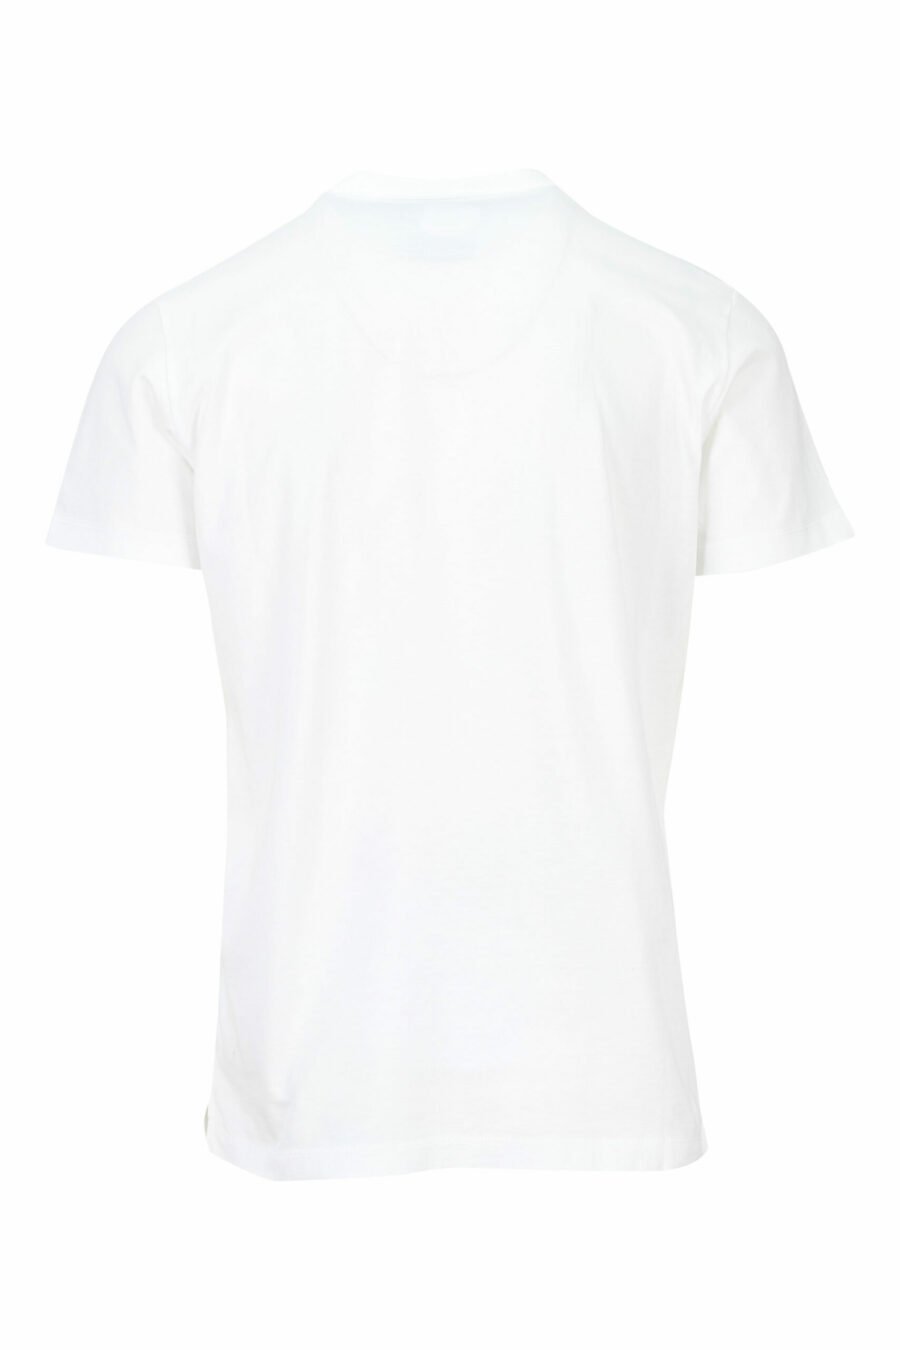 T-shirt blanc avec maxilogo bleu "college" - 8054148086442 1 scaled